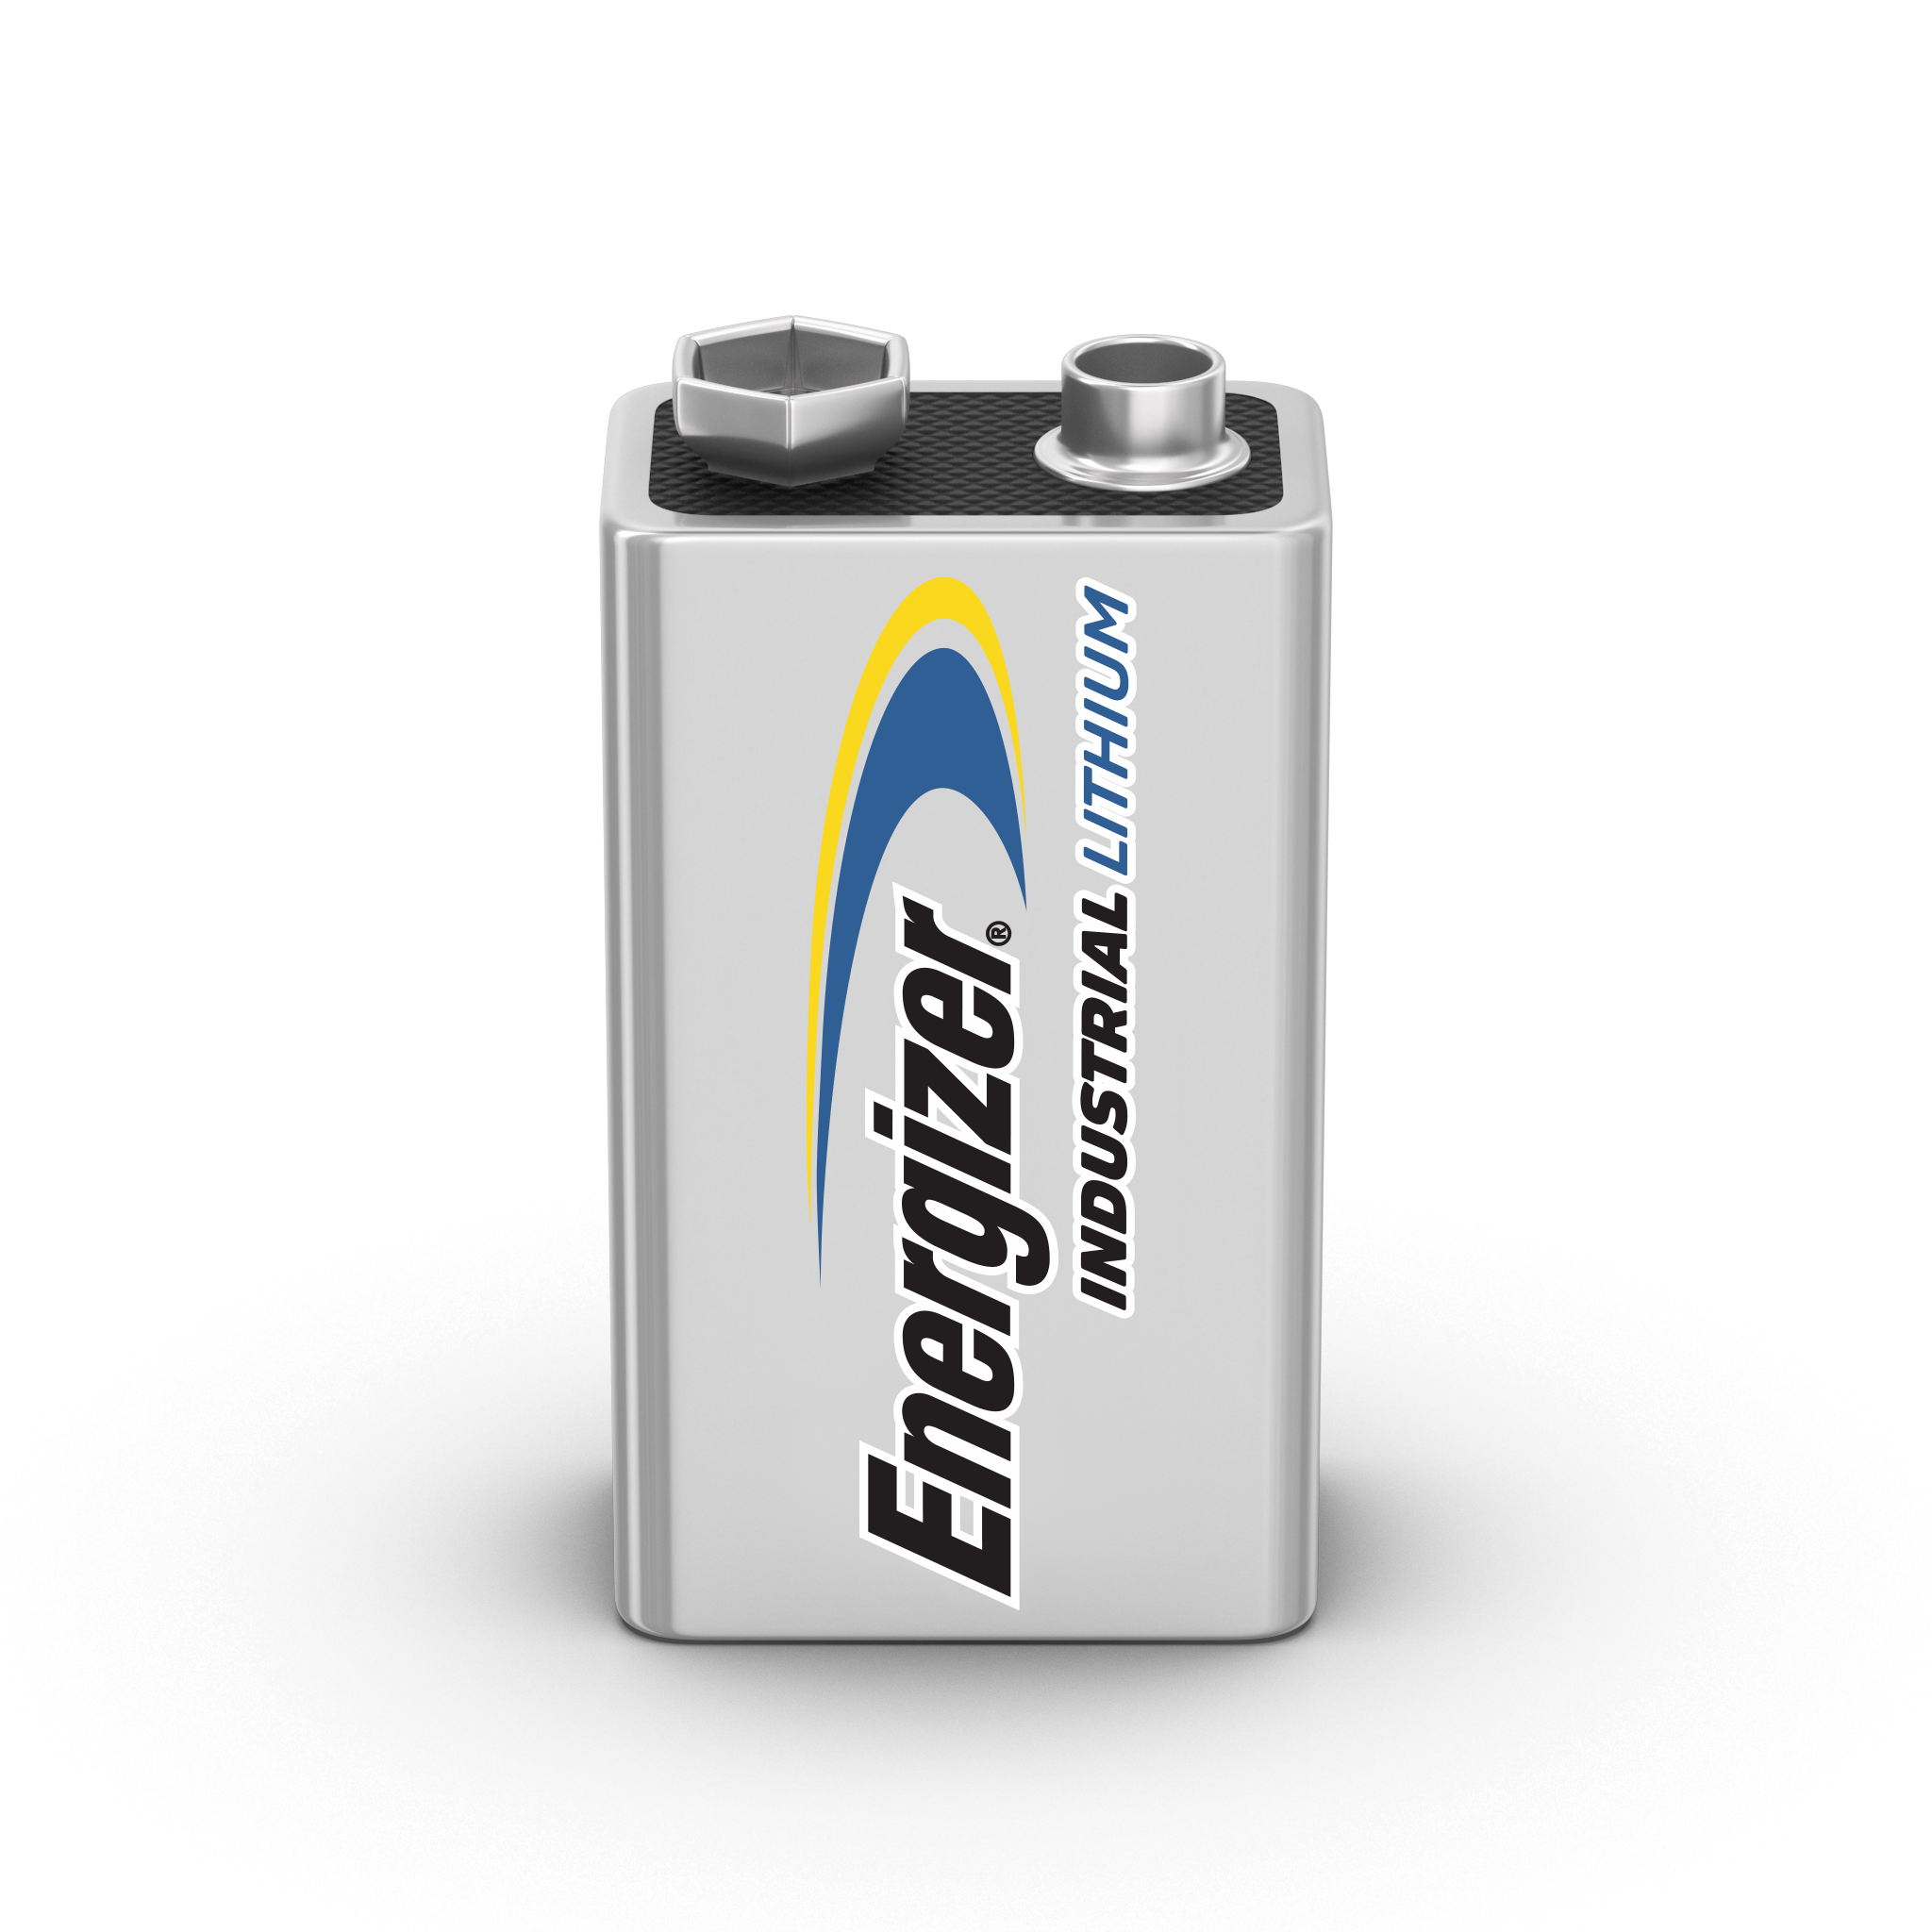 Energizer Industrial Lithium 9V Battery